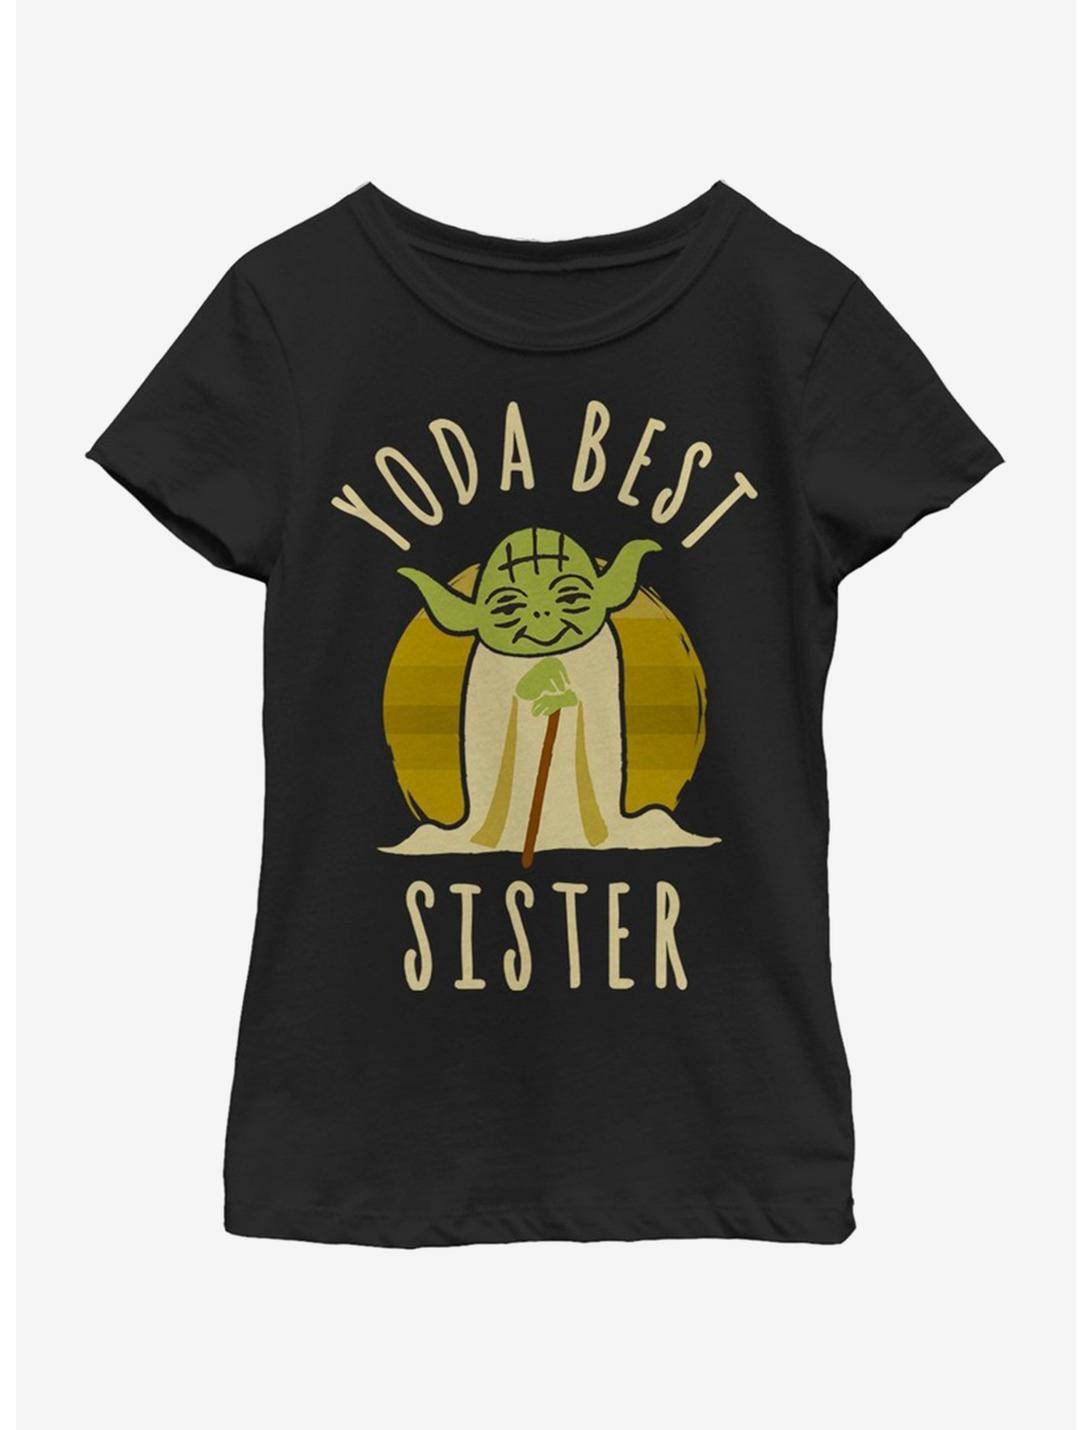 Star Wars Best Sister Yoda Says Youth Girls T-Shirt, BLACK, hi-res